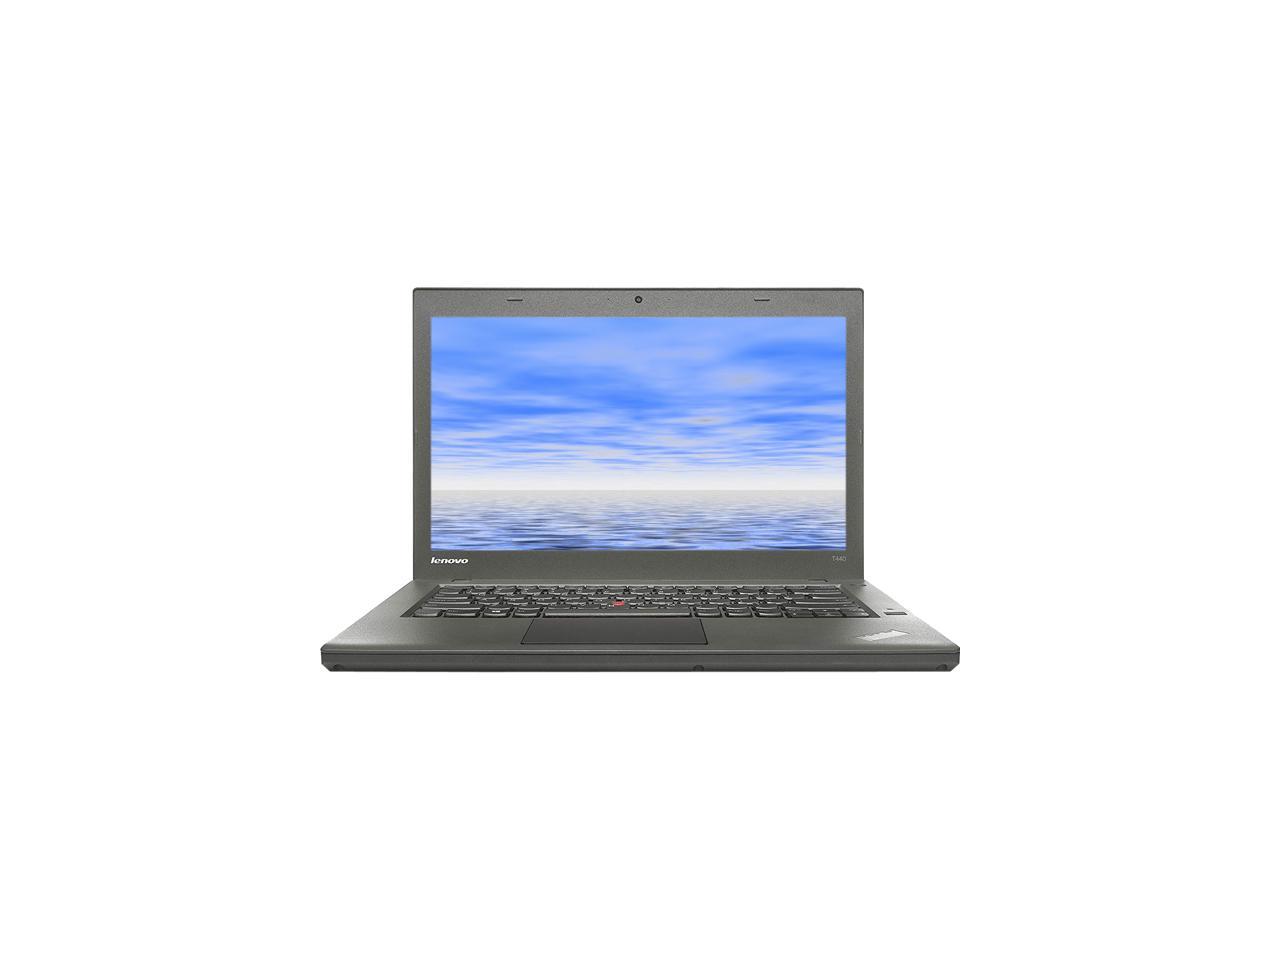 Lenovo Grade A Laptop ThinkPad T440 Intel Core i5 4th Gen 4300U (1.90 GHz) 4 GB Memory 500 GB HDD Intel HD Graphics 4400 14.0" Windows 10 Pro 64-bit